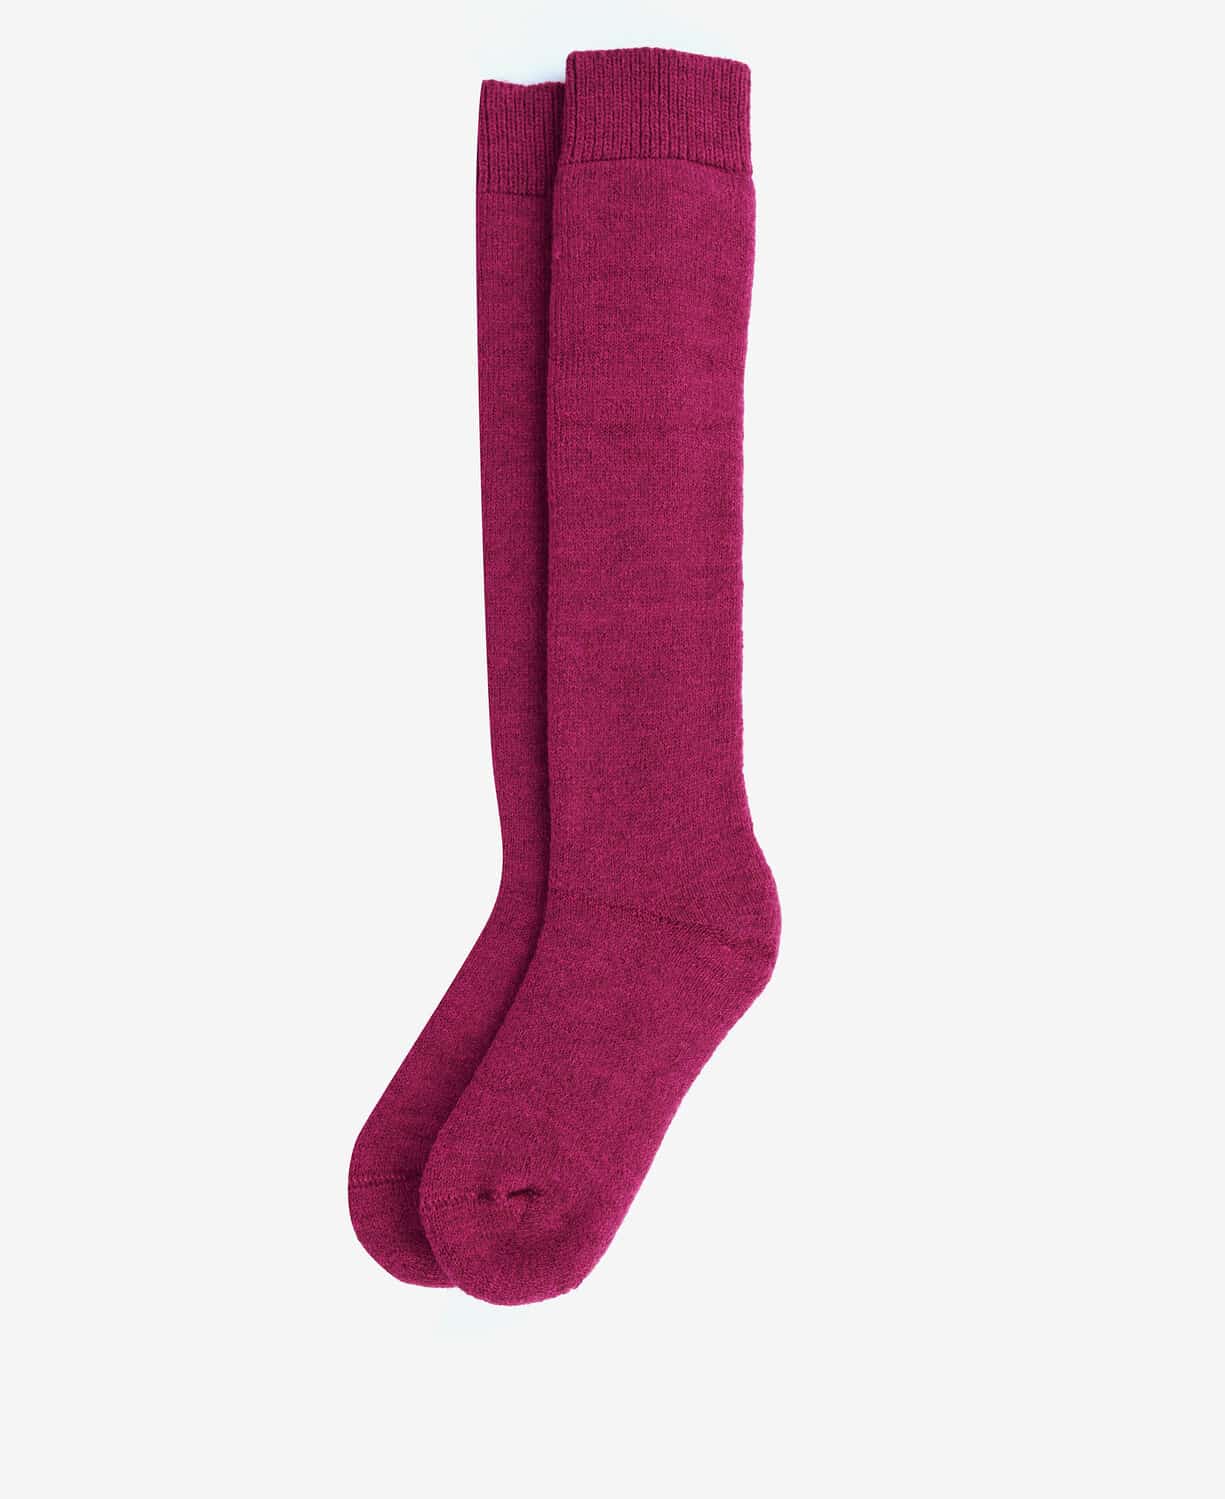 Knee length wellington socks in raspberry